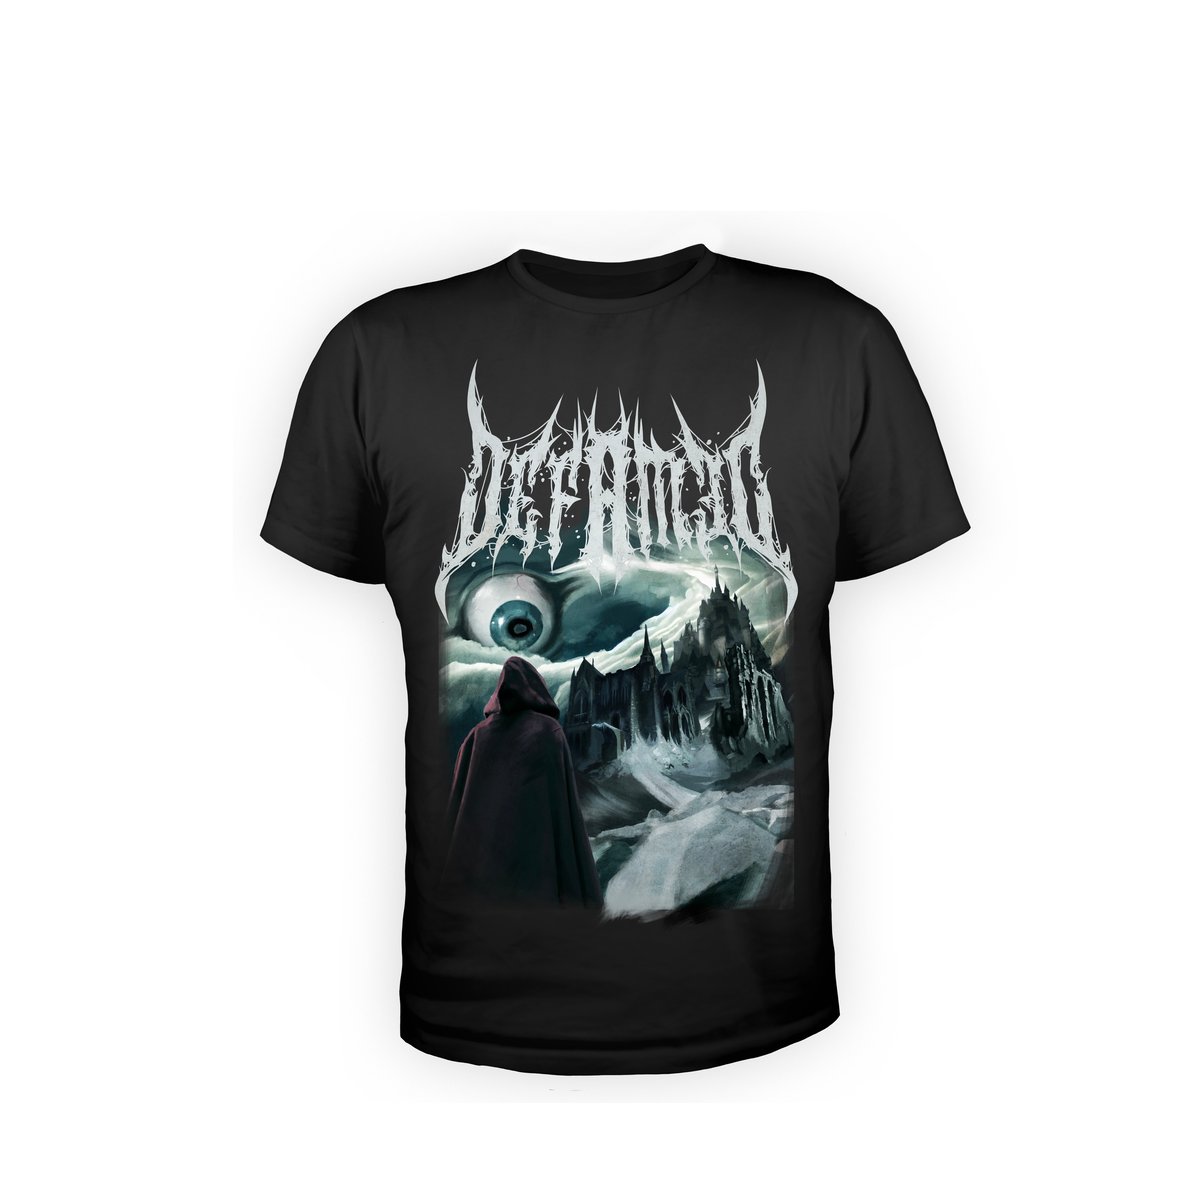 Image of “Blackblood” T-Shirt